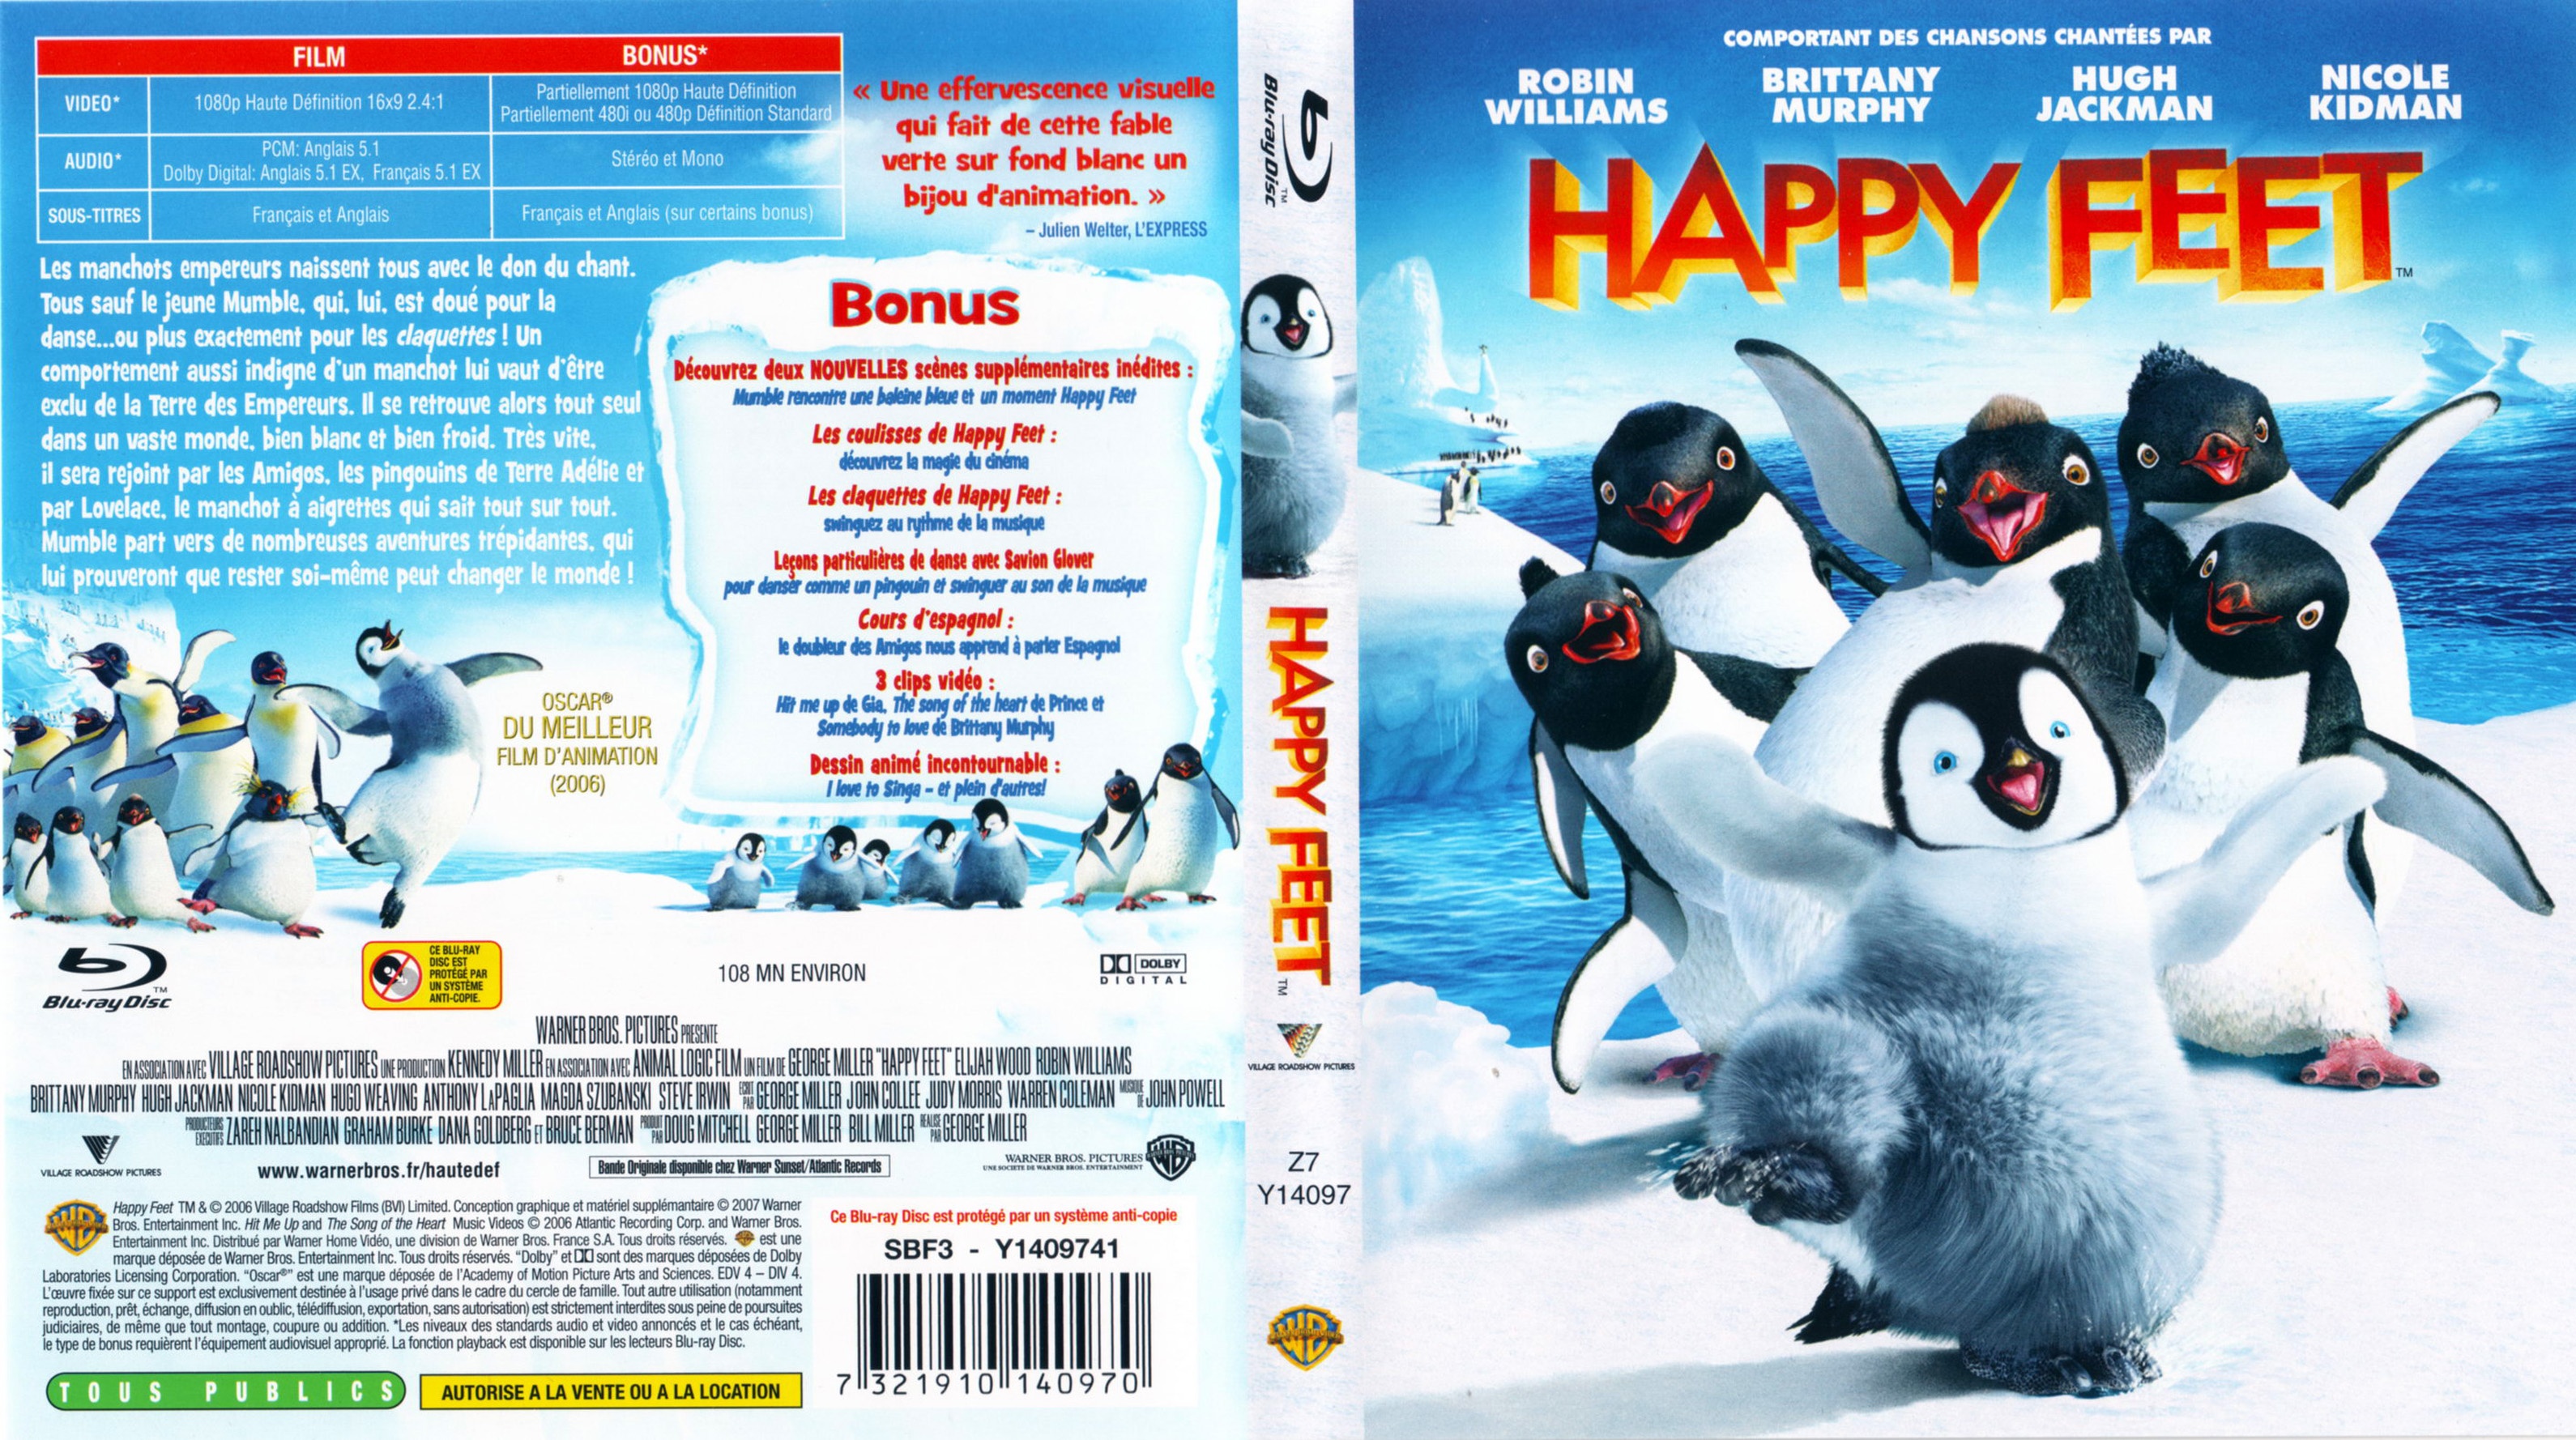 Jaquette DVD Happy feet (BLU-RAY)